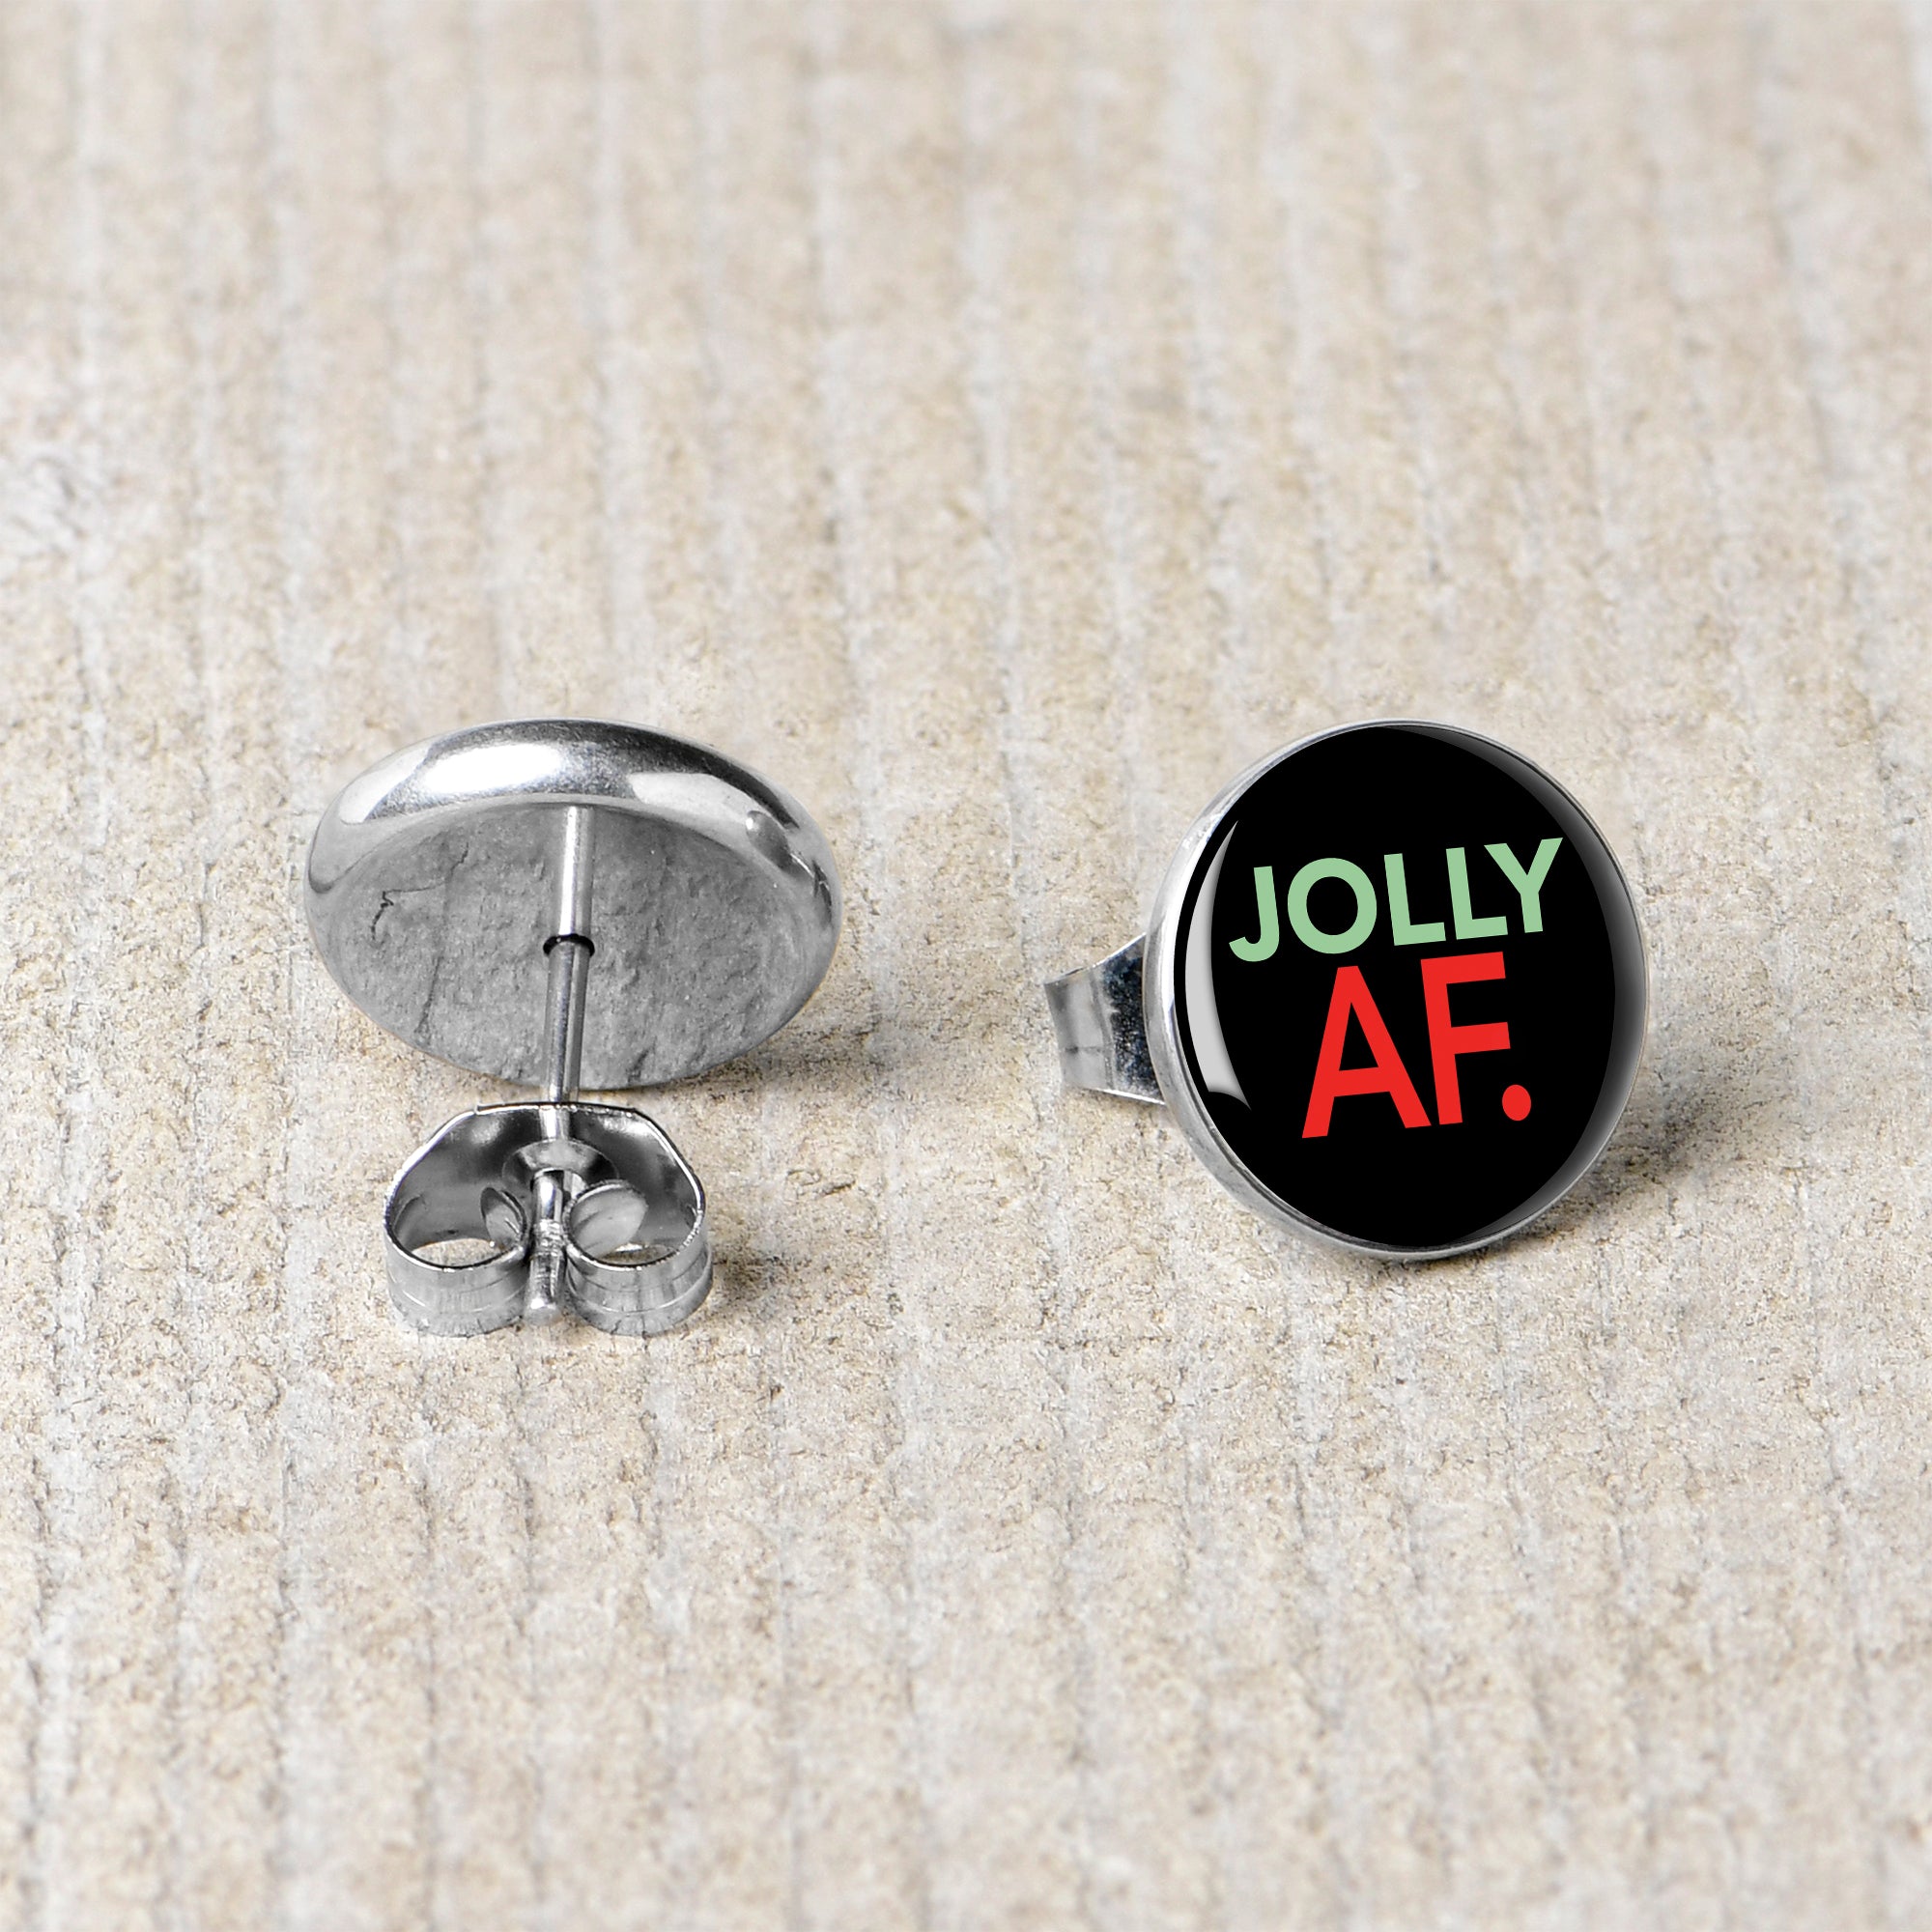 Jolly AF Festive Holiday Christmas Stud Earrings